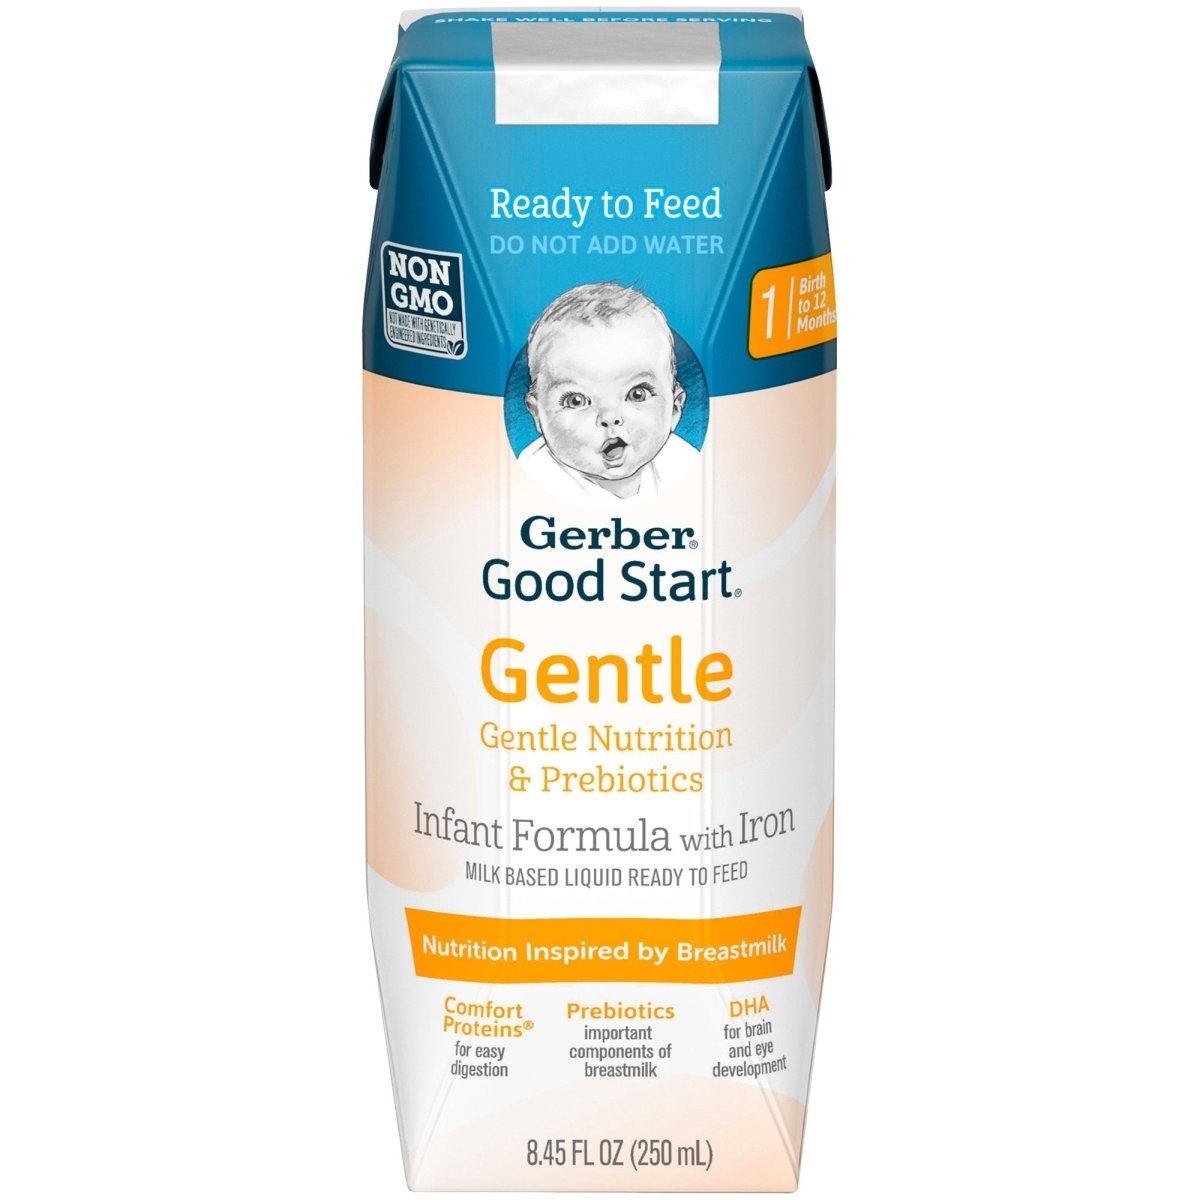 Gerber Good Start Gentle NonGMO Ready to Use Infant Formula, 8.45 oz. Carton - 784698_CS - 1